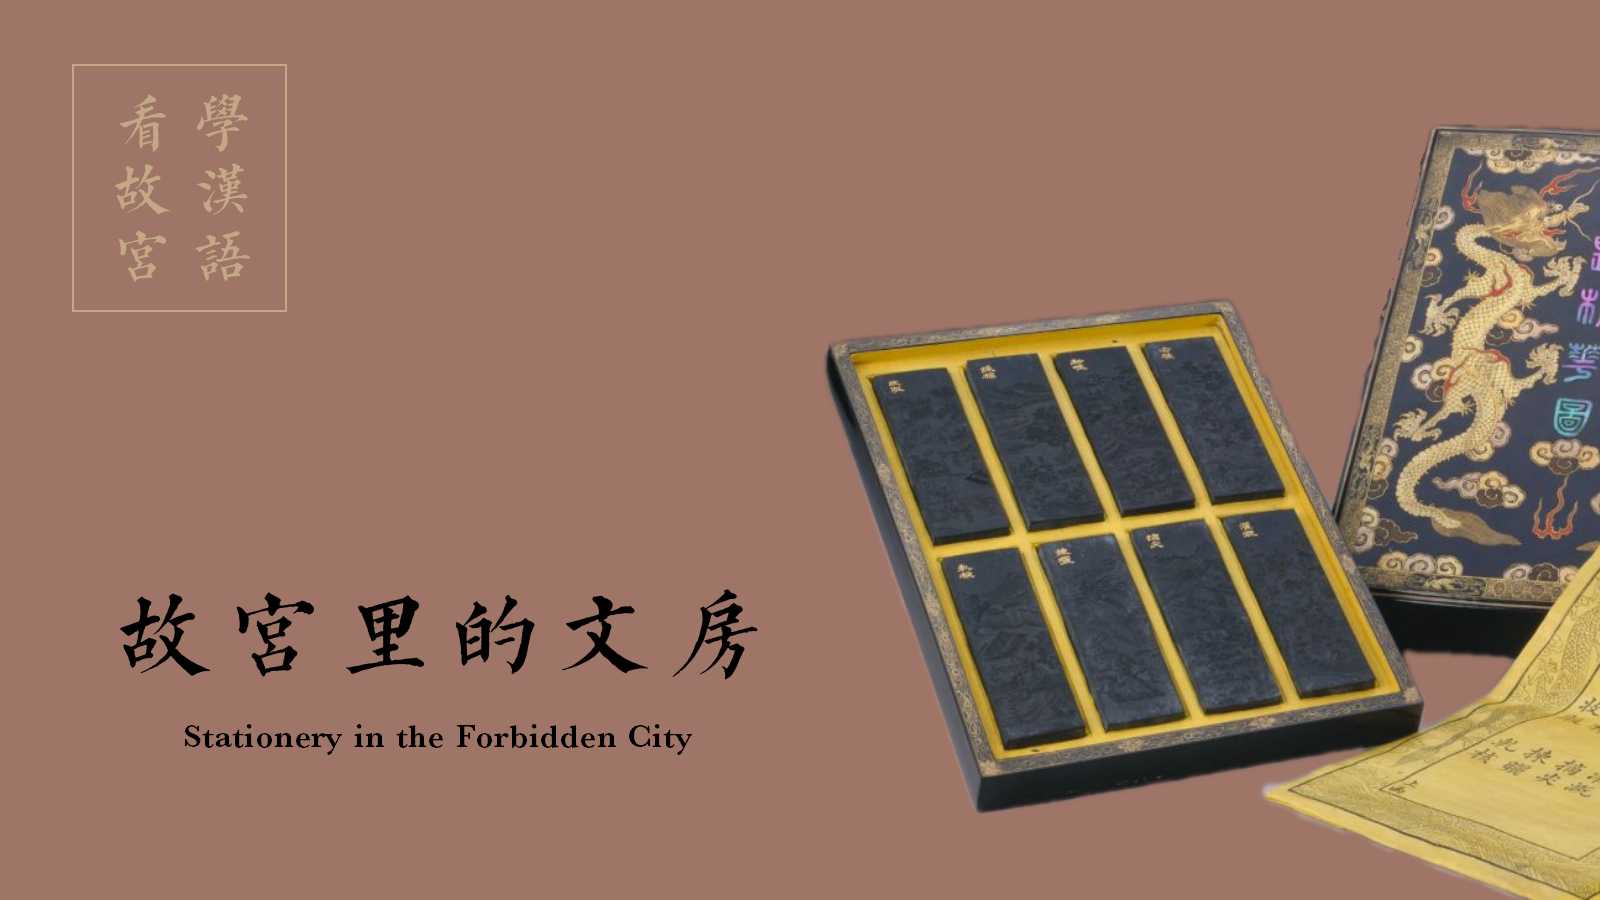 Treasures in the Forbidden City [Episode 5] The Study Rooms in the Forbidden City